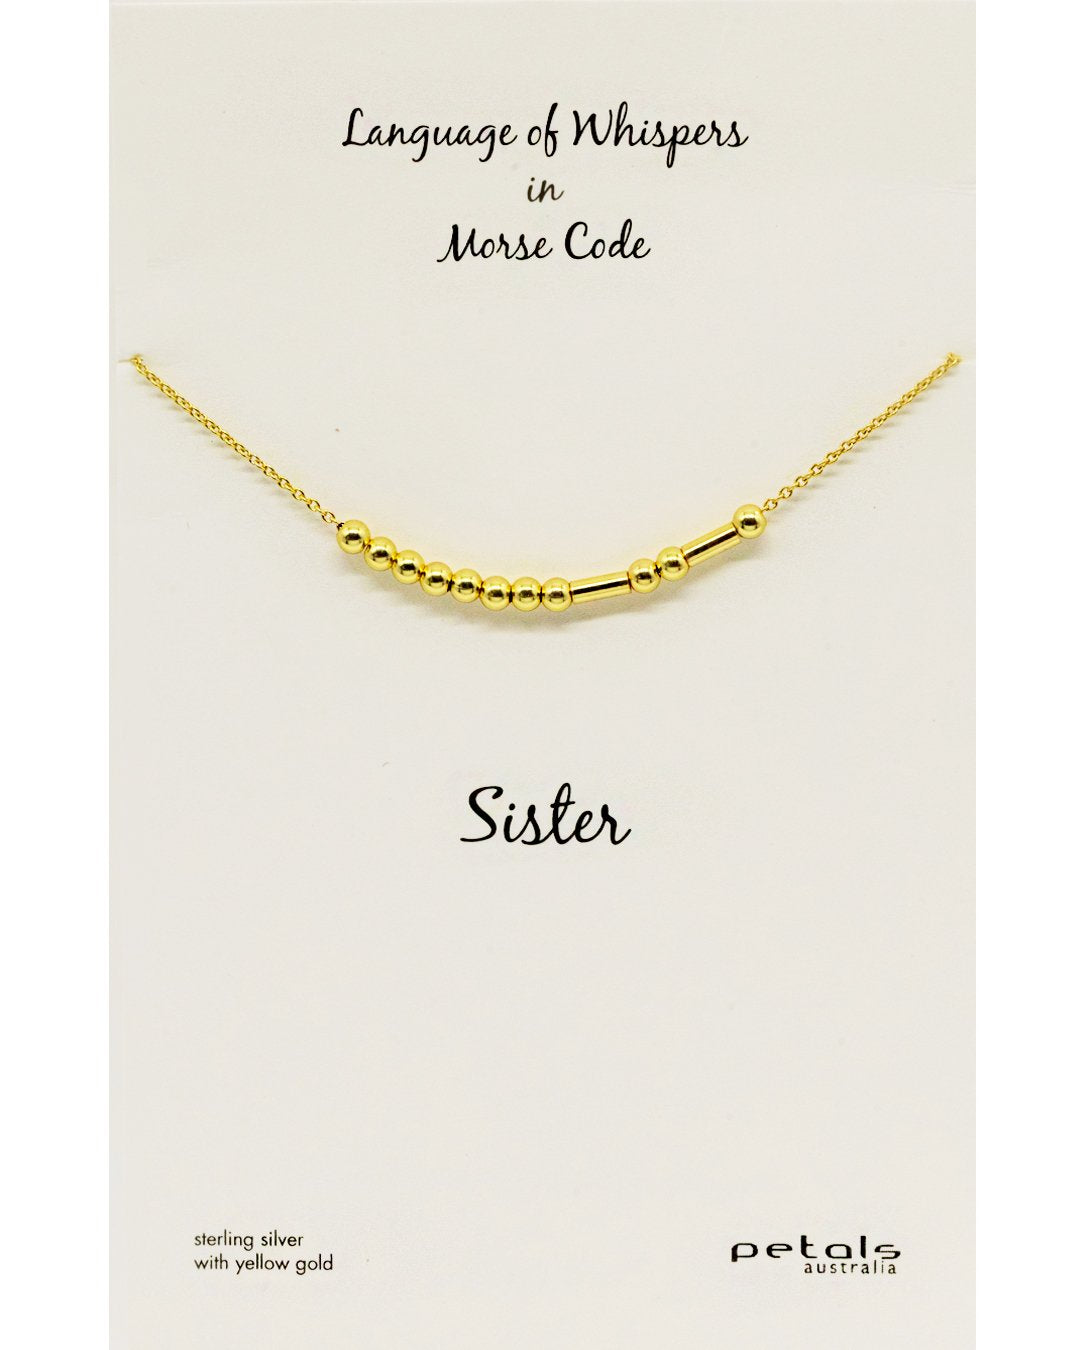 Sister Morse Code Necklace